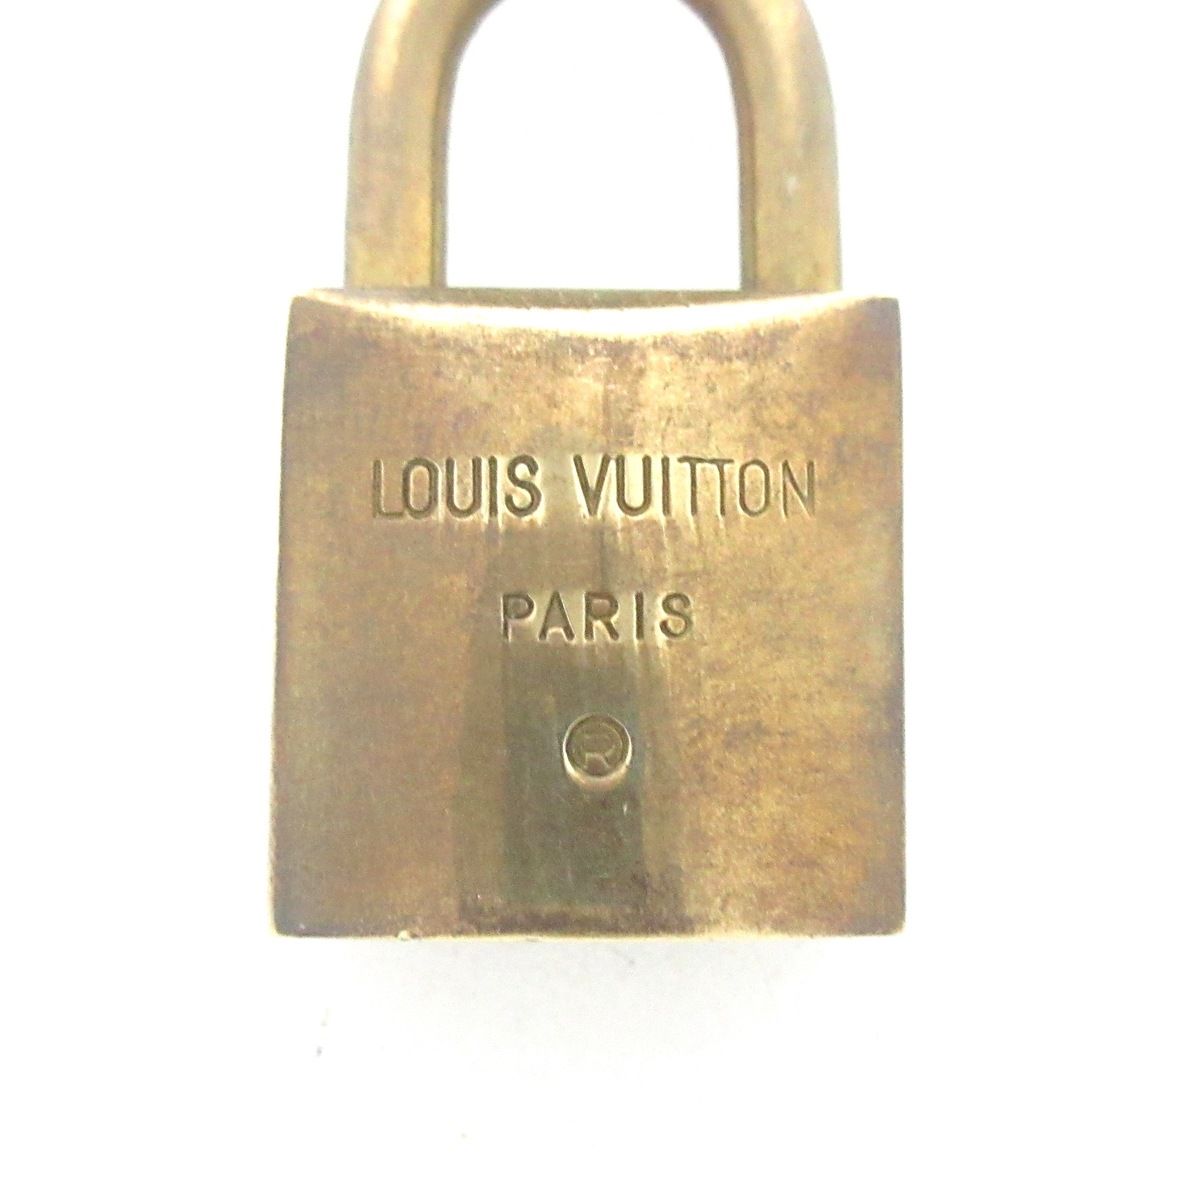 LOUIS VUITTON(ルイヴィトン) 小物 パドロック R10000 ゴールド パドロック(南京錠)/229 真鍮